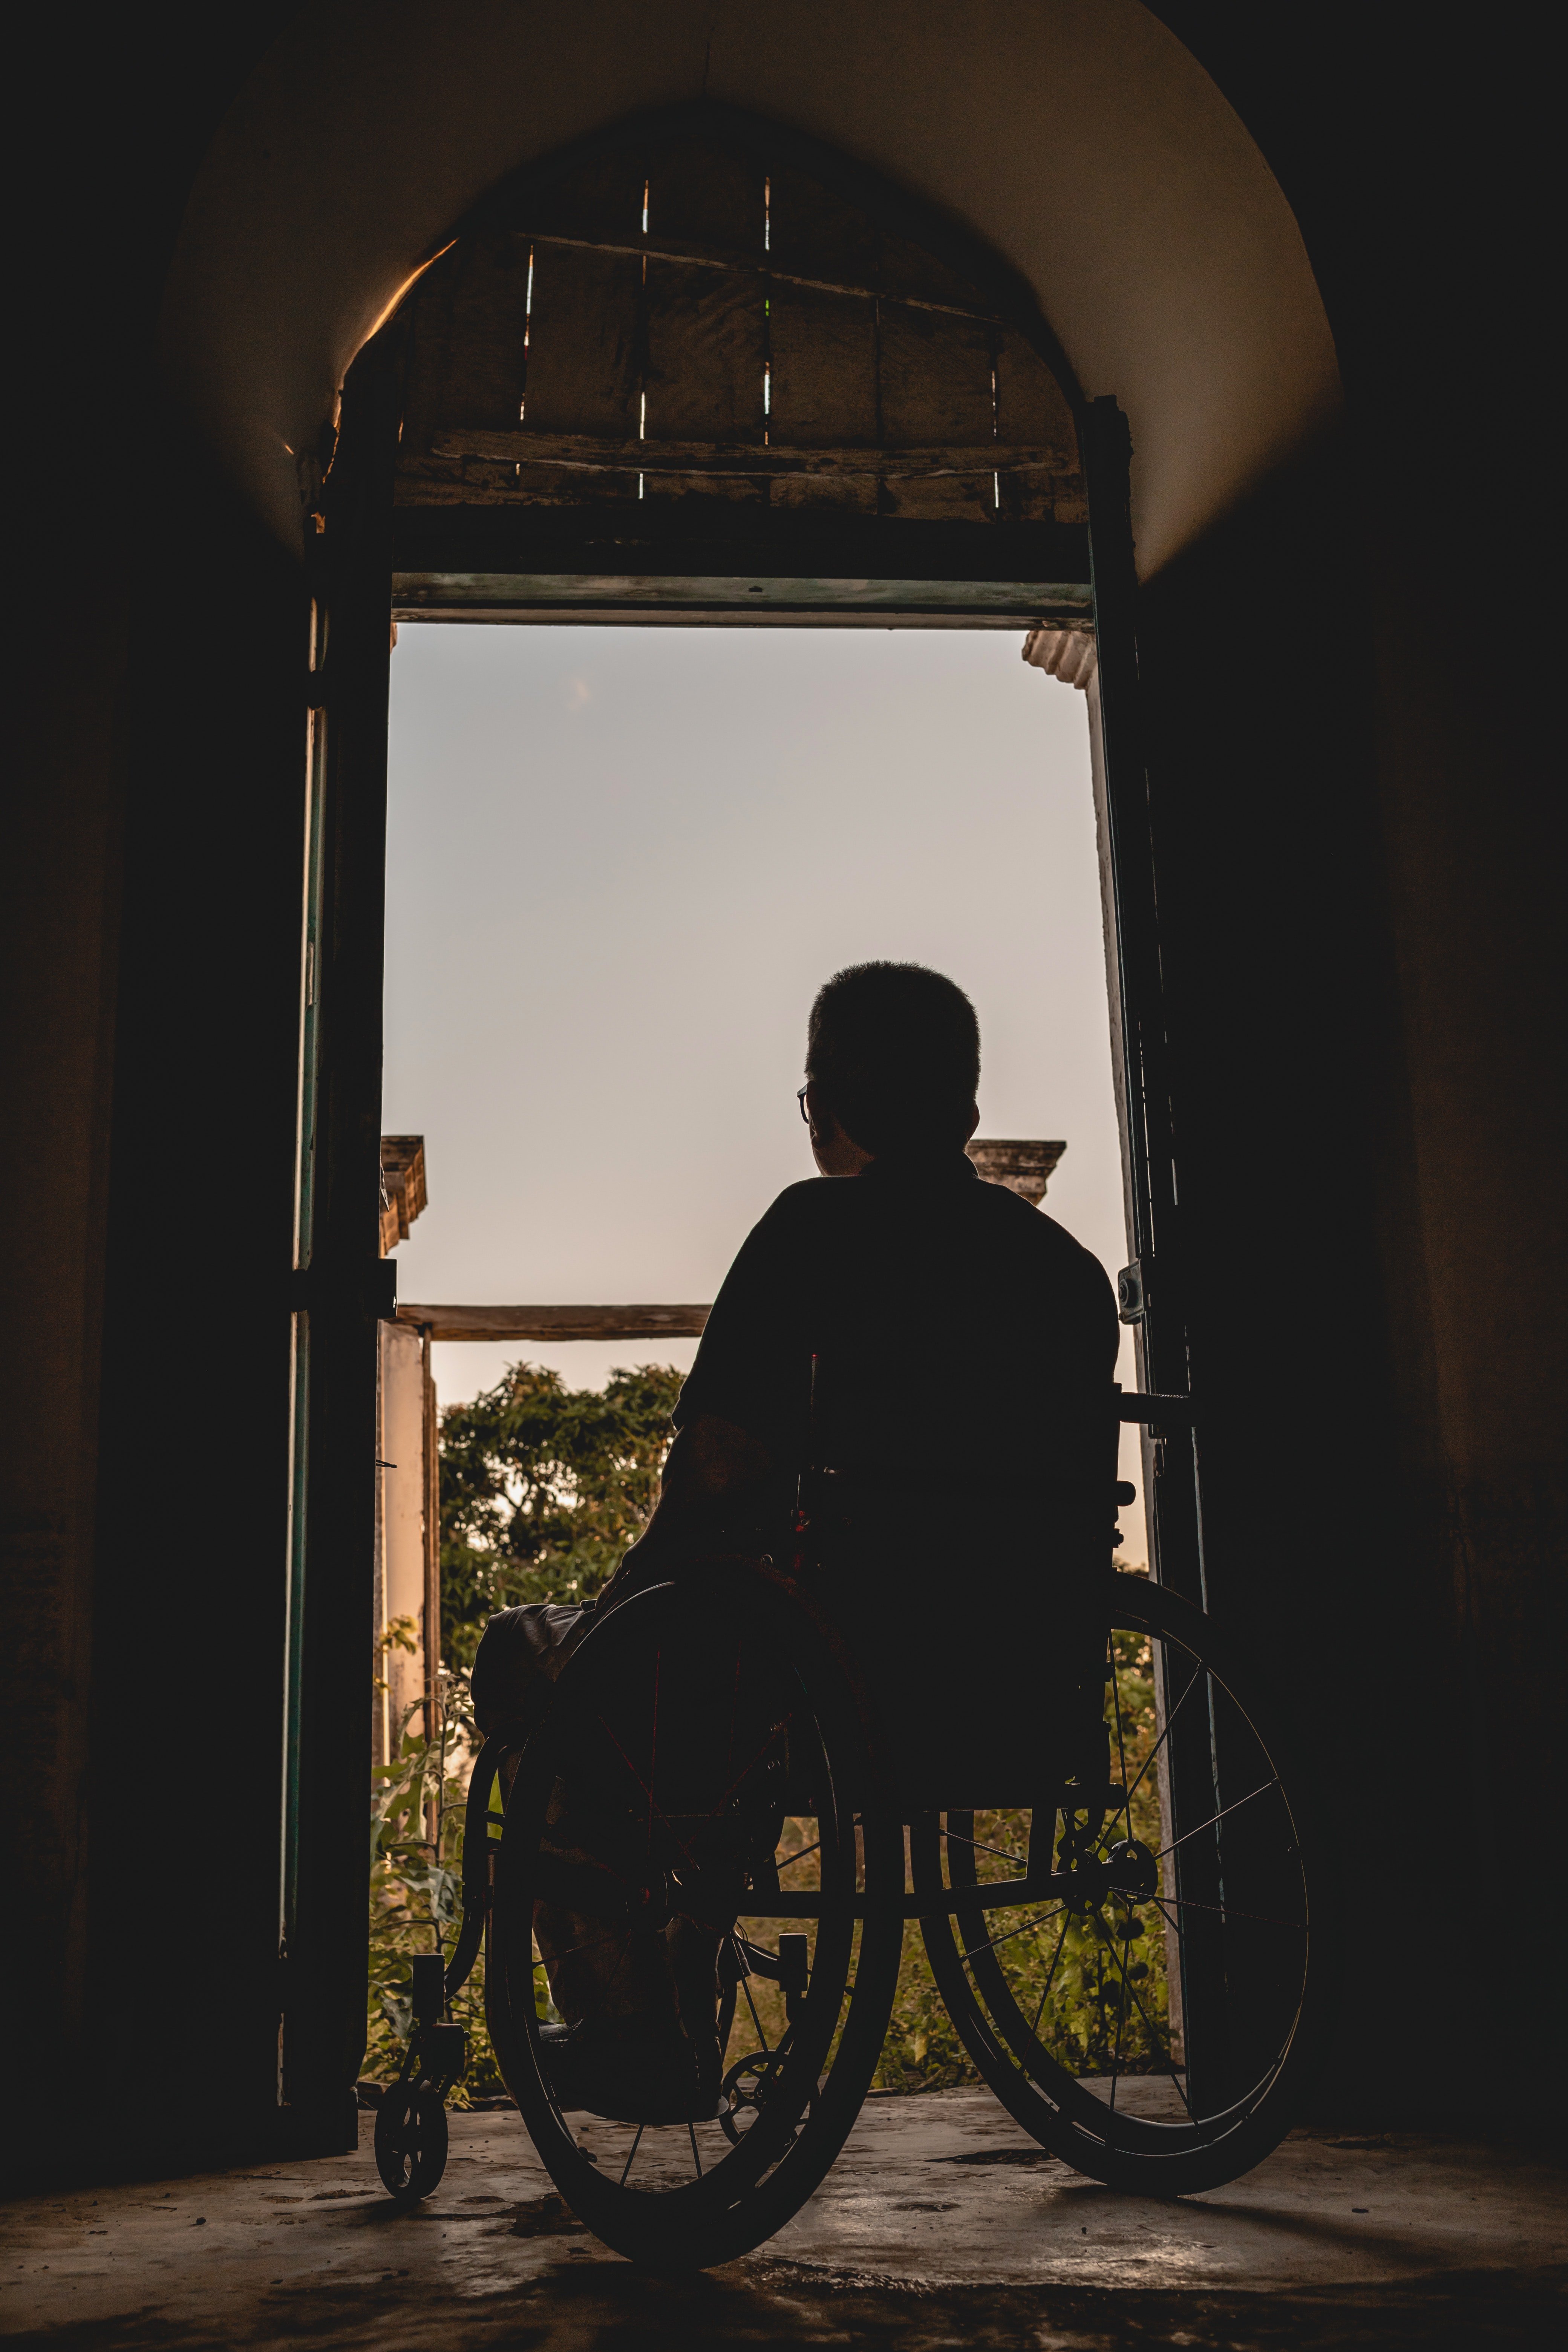 Un hombre en una silla de ruedas mirando a través de una ventana. | Foto: Pexels